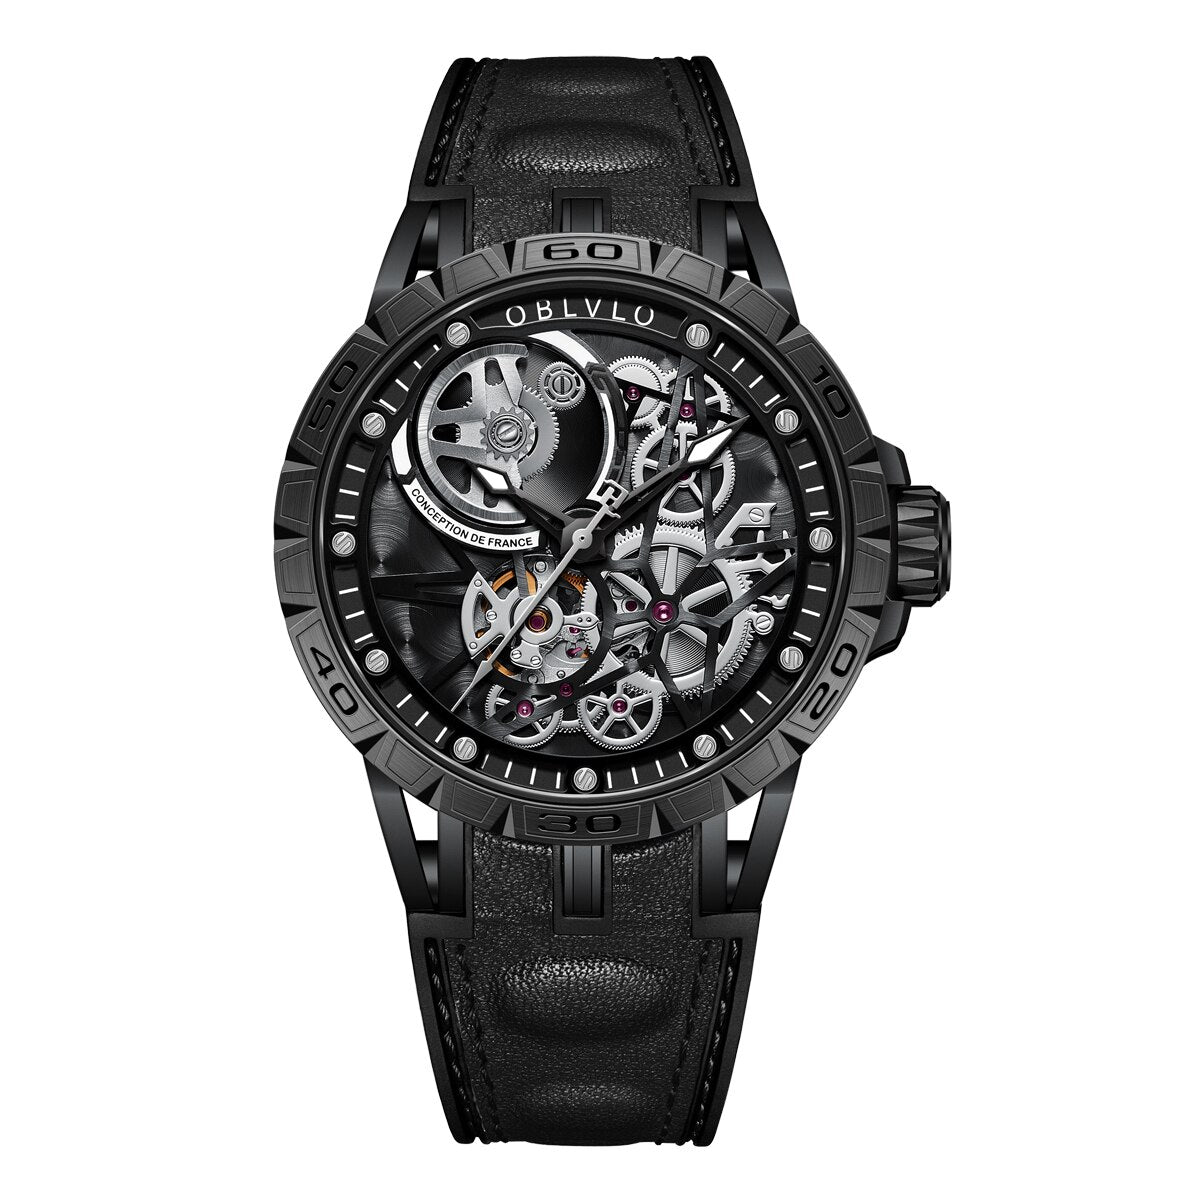 Black Oblvlo LM Skeleton Sport, Automatic Self-Wind Mechanical Watch from fiveto.co.uk